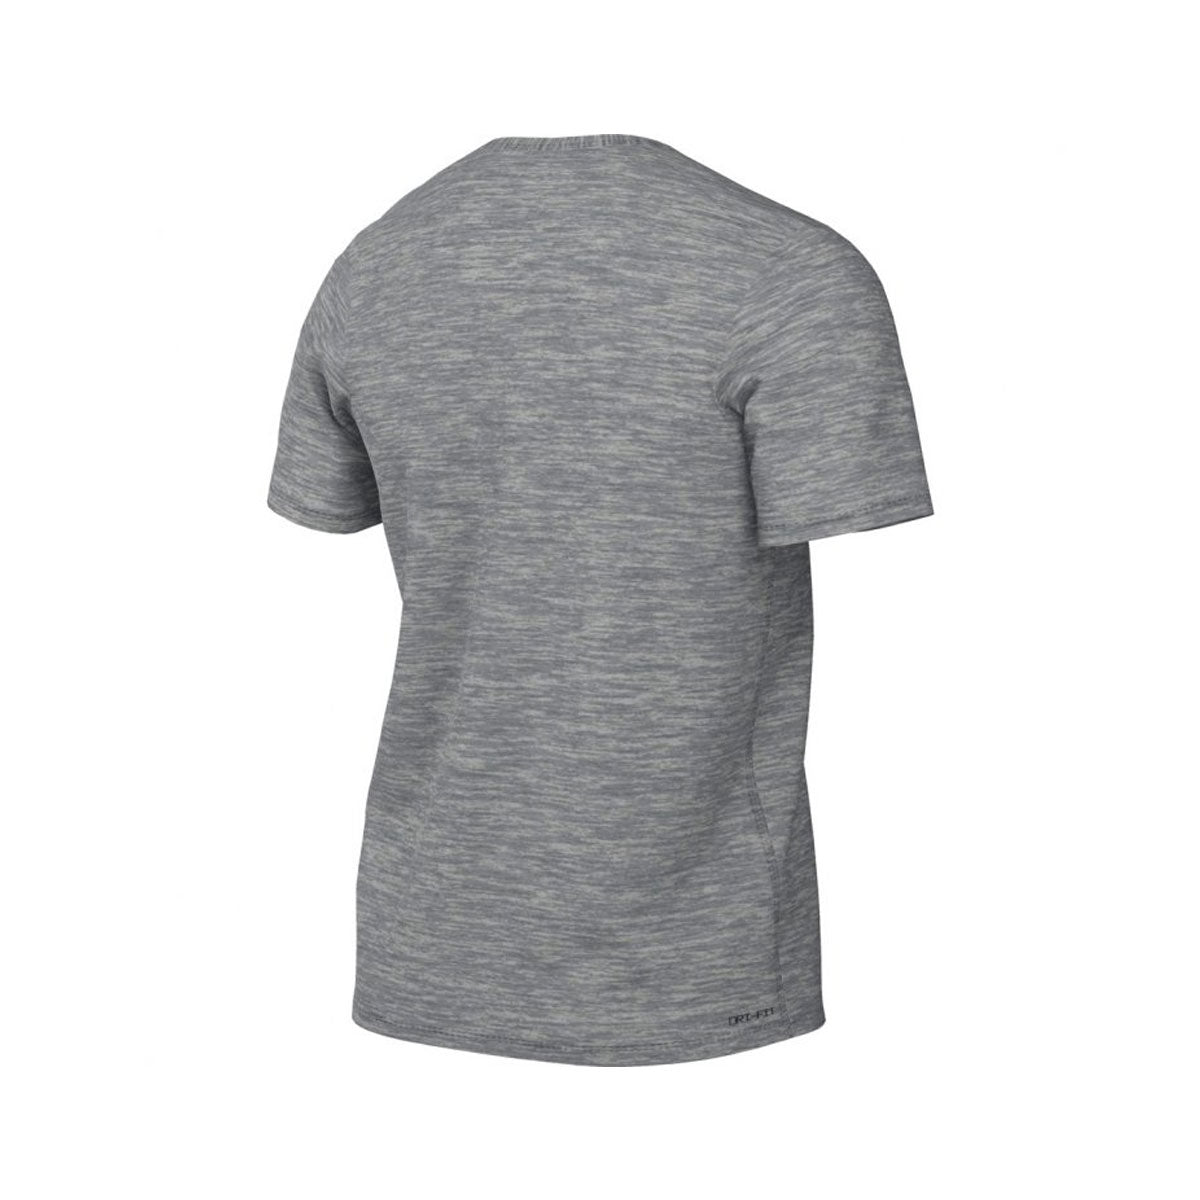 Nike Men's Dri-FIT UV Hyverse Short-Sleeve Top - KickzStore